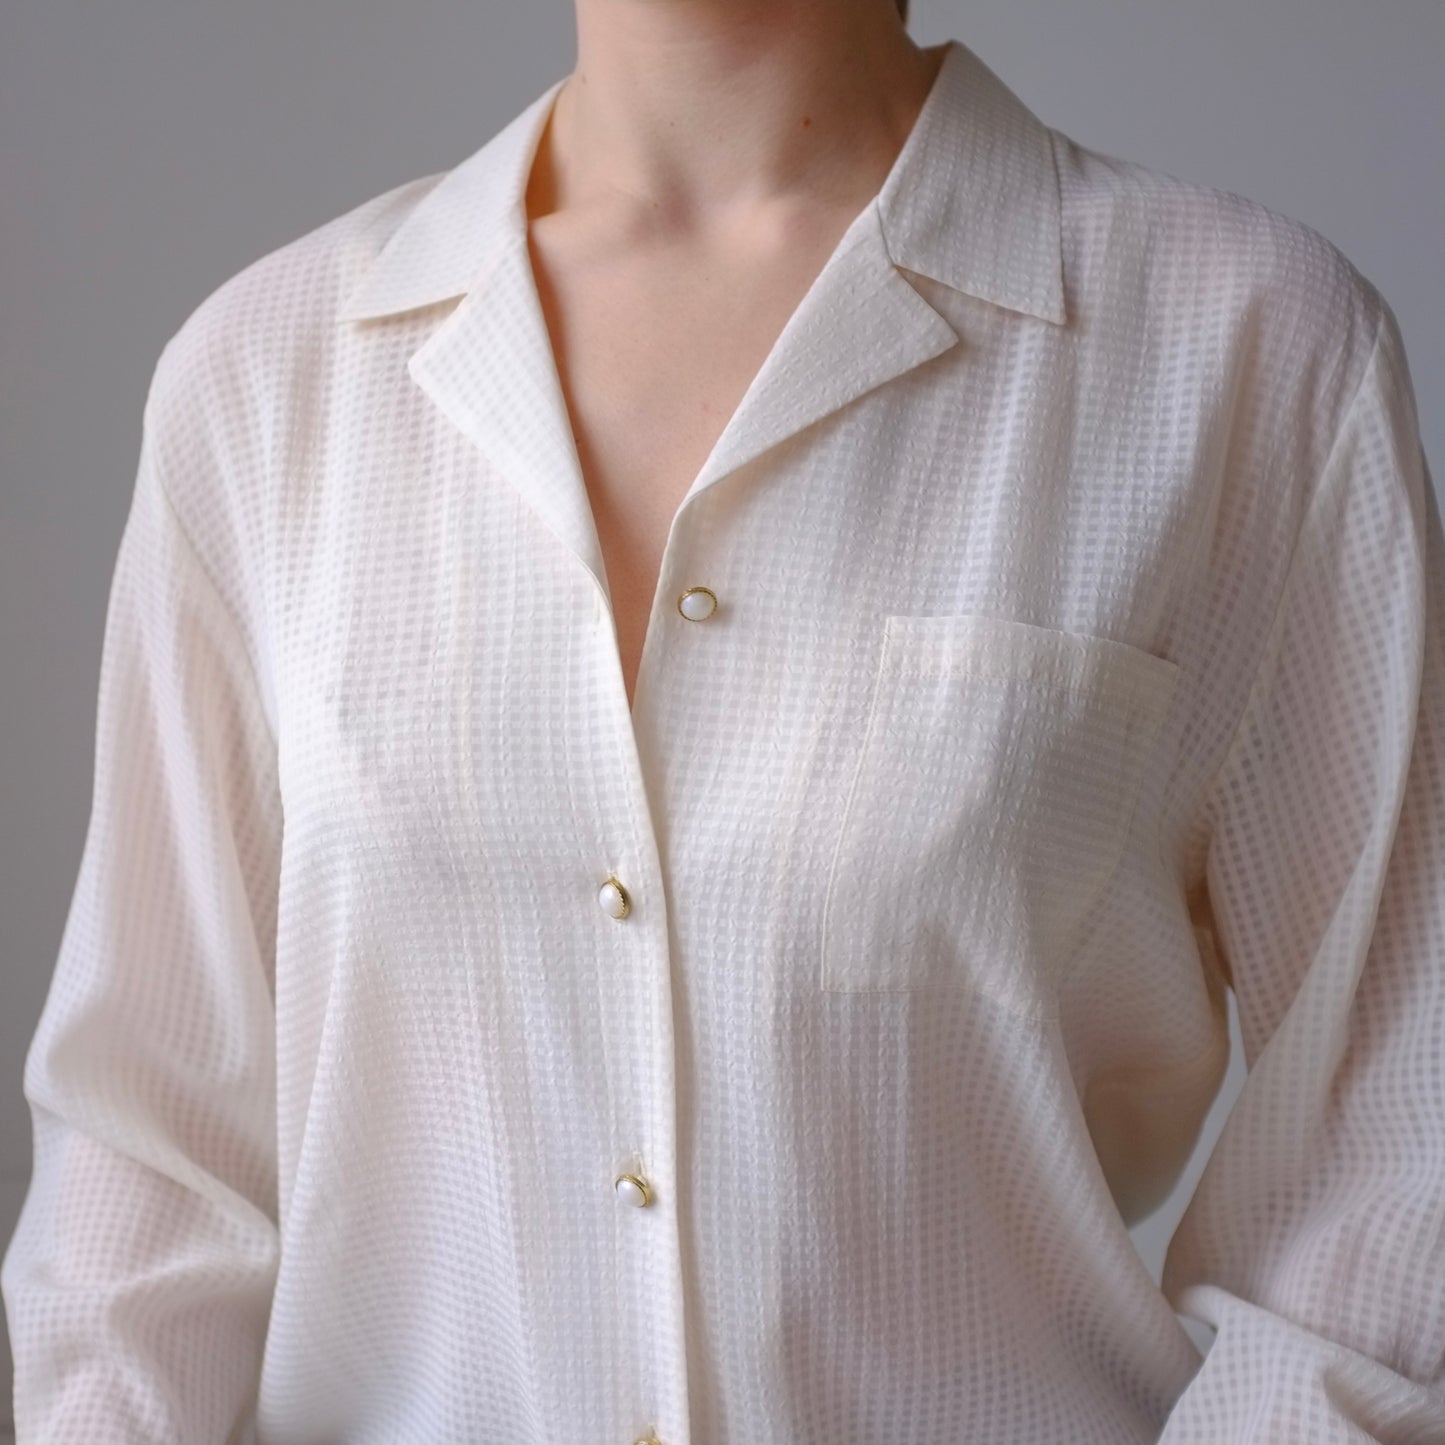 Ivory blouse